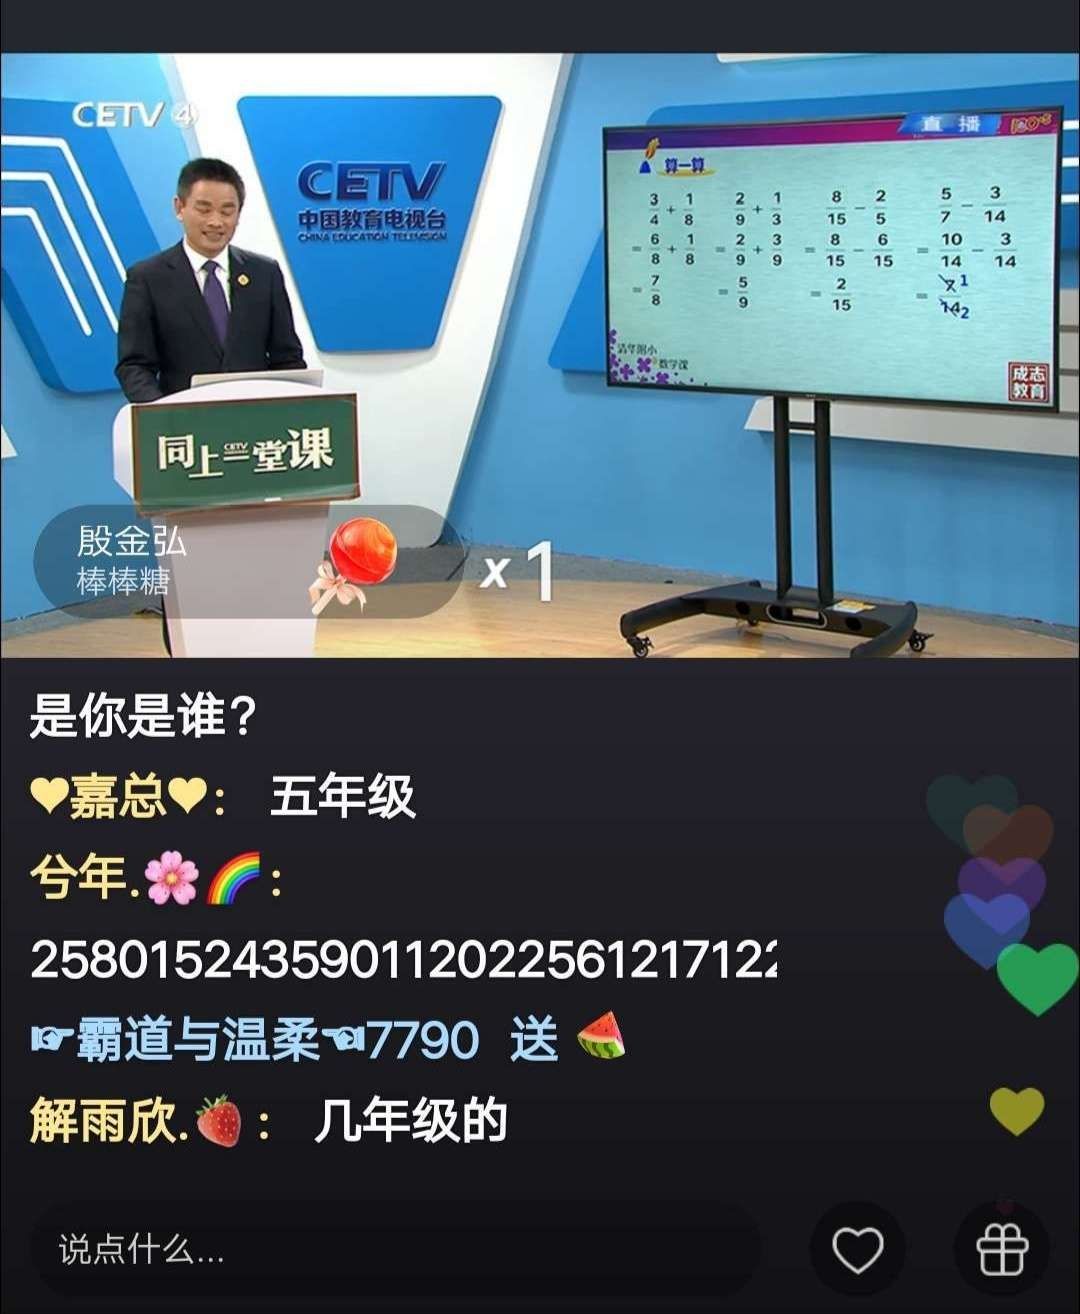 cetv1，cetv1中国教育电视台一套直播吗